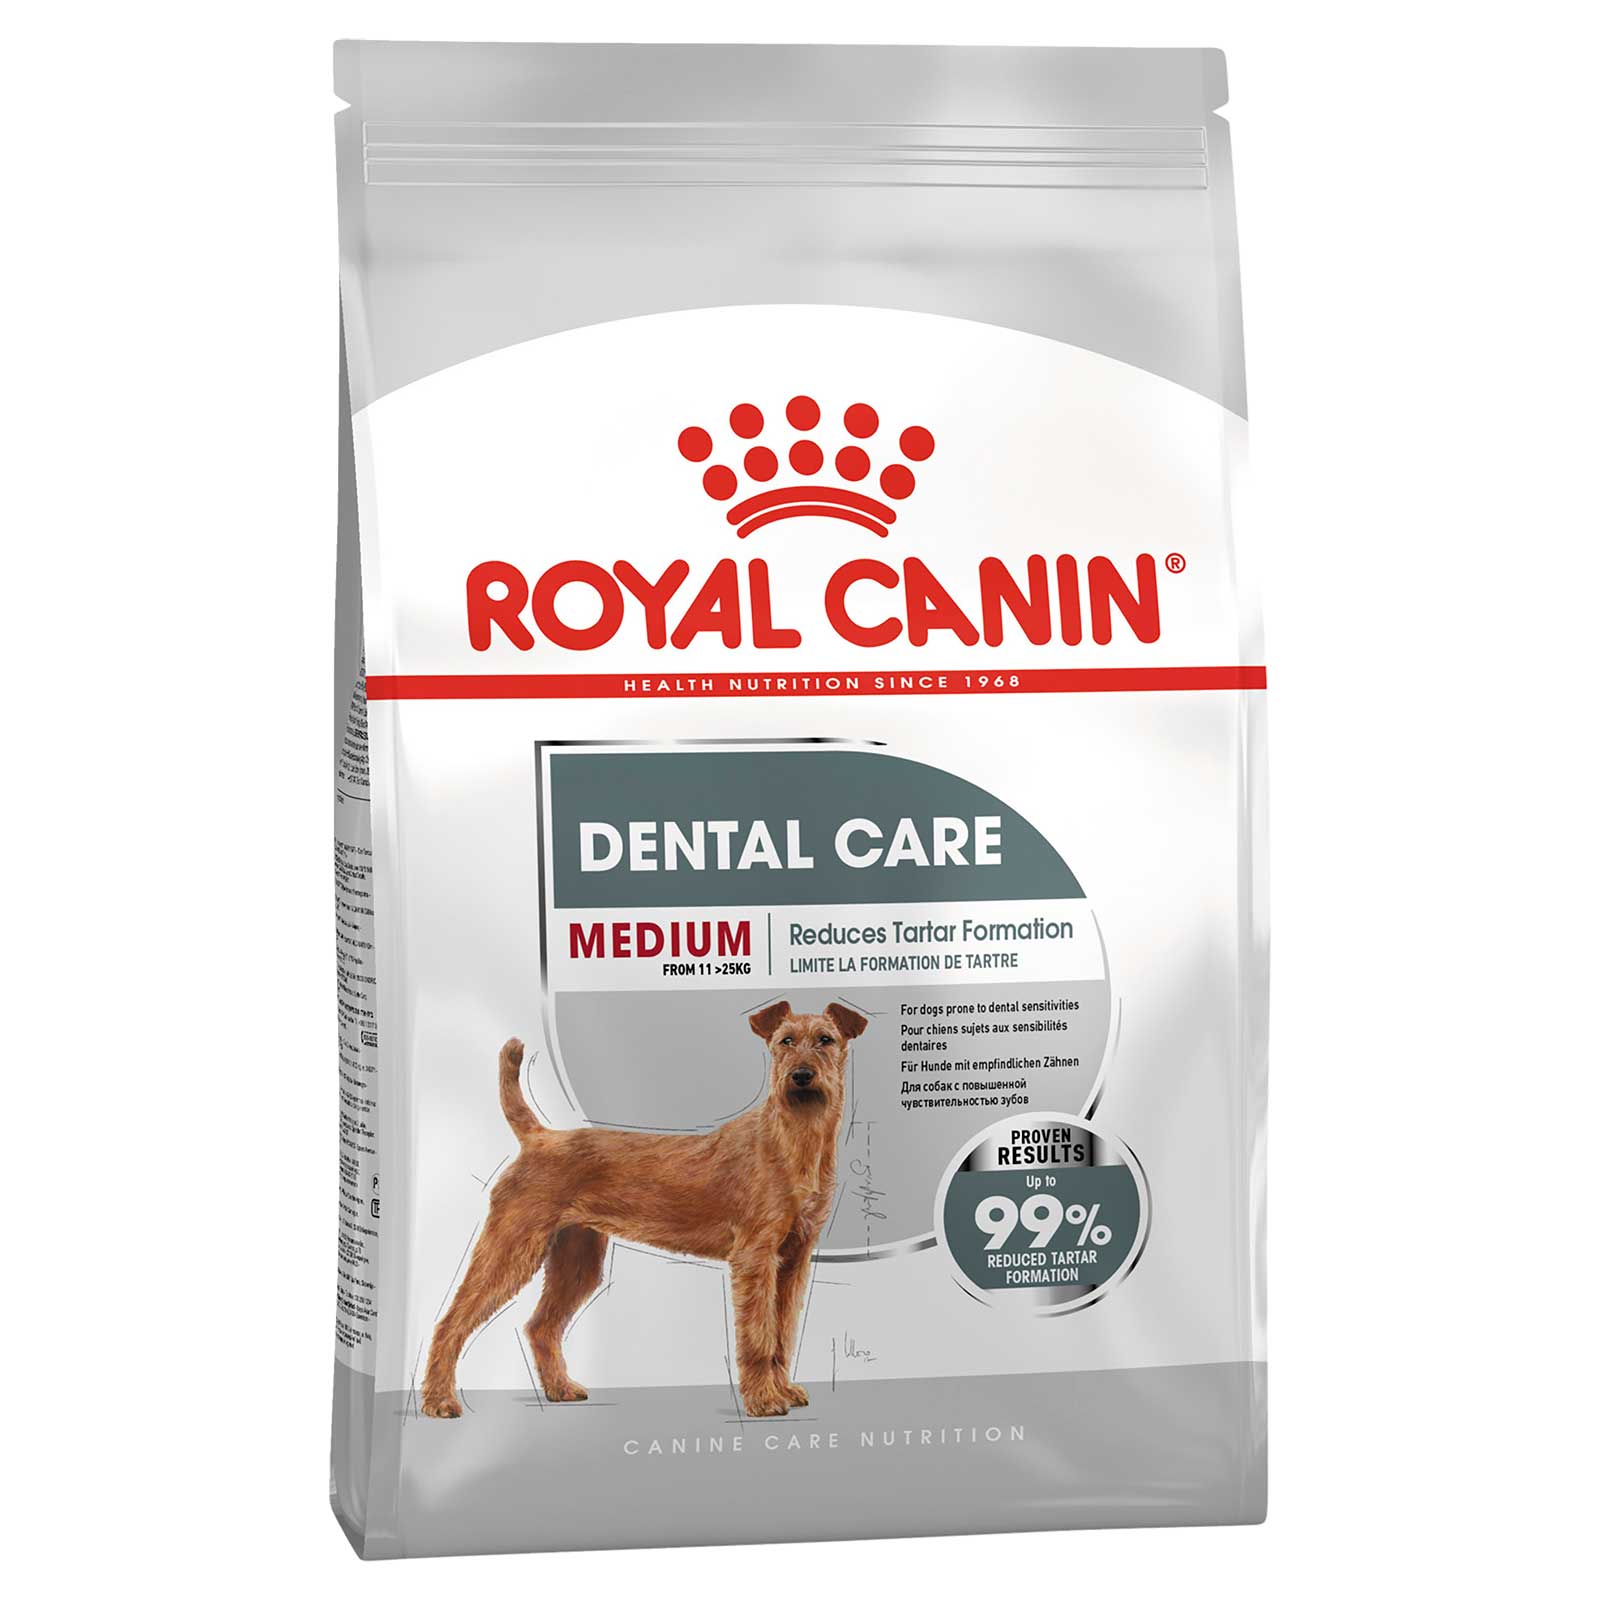 Royal Canin Dog Food Dental Care Medium